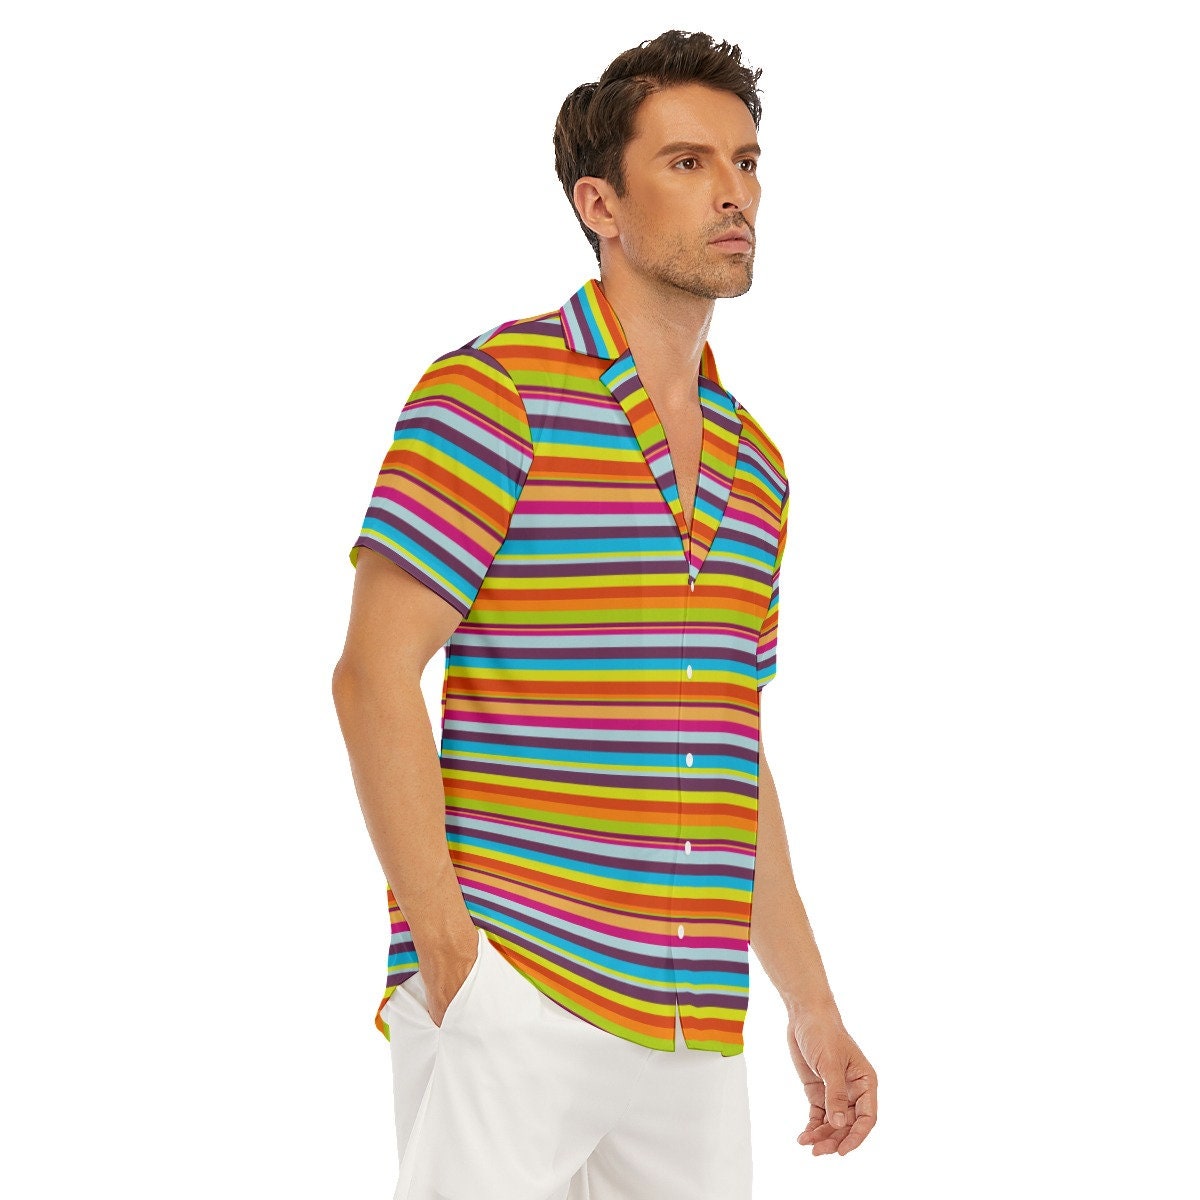 Stripe Shirt Men, Multicolor Shirt Men, 70s style Shirt, Hippie Shirt, Short Sleeve Shirt Men, Men's Tops, Rainbow Shirt, Men's Dress Shirt